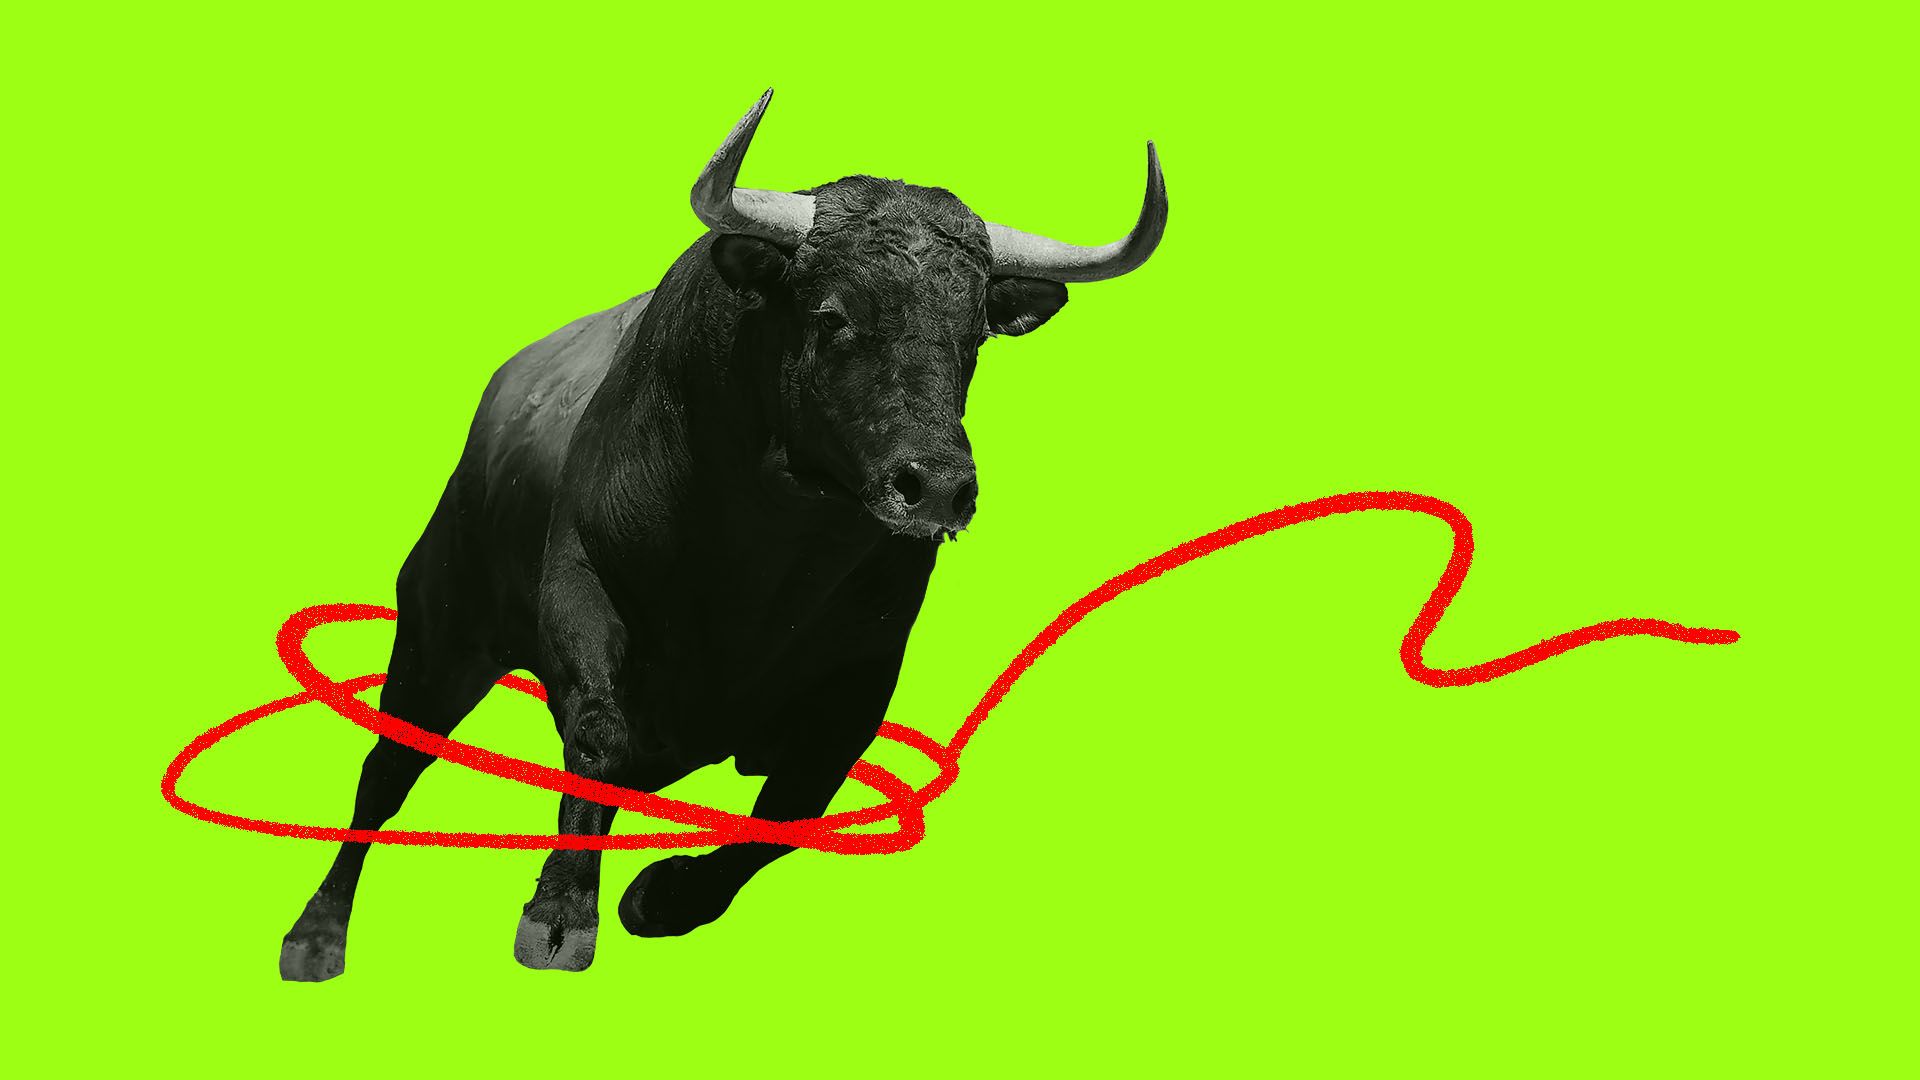 Illustration of a stock market bull